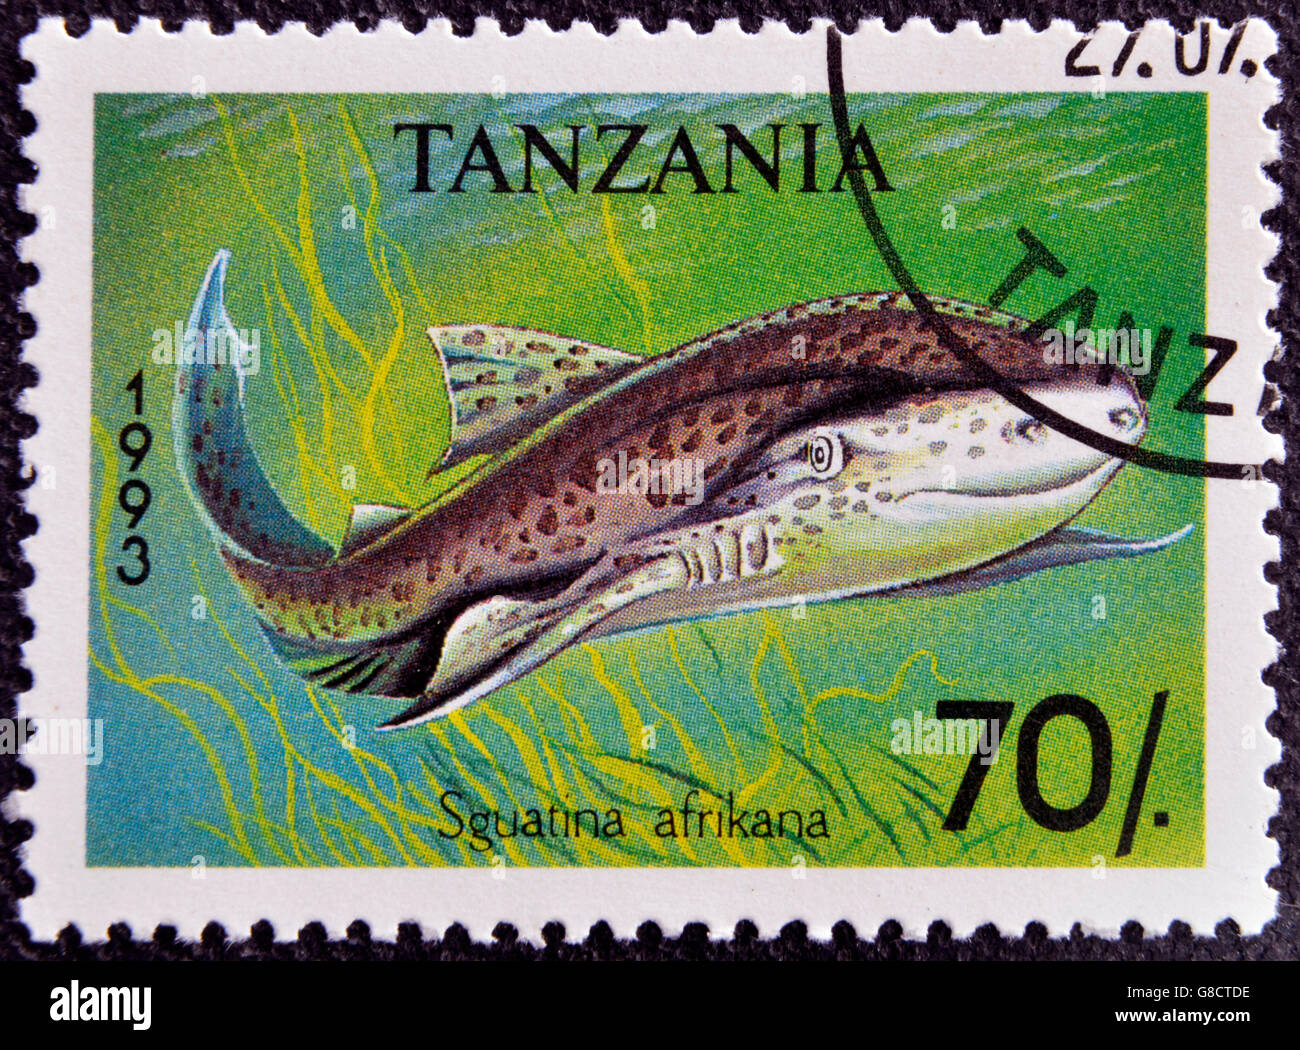 TANZANIA - CIRCA 1993: A stamp printed in Tanzania shows African angelshark, Squatina africana, circa 1993 Stock Photo